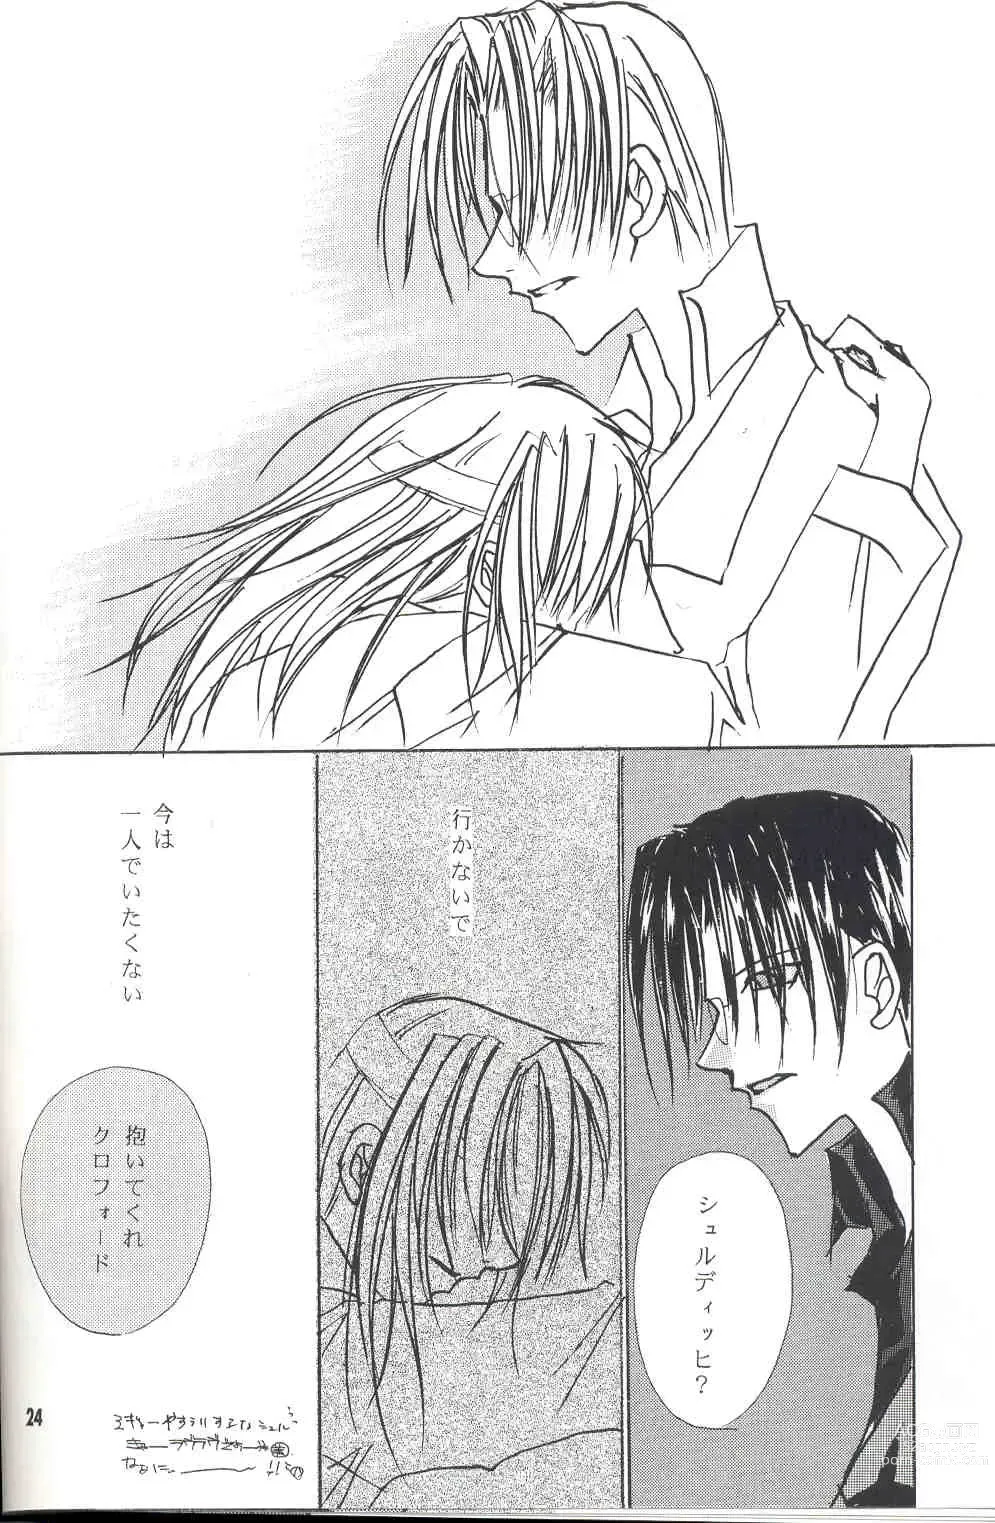 Page 23 of doujinshi Sentimental